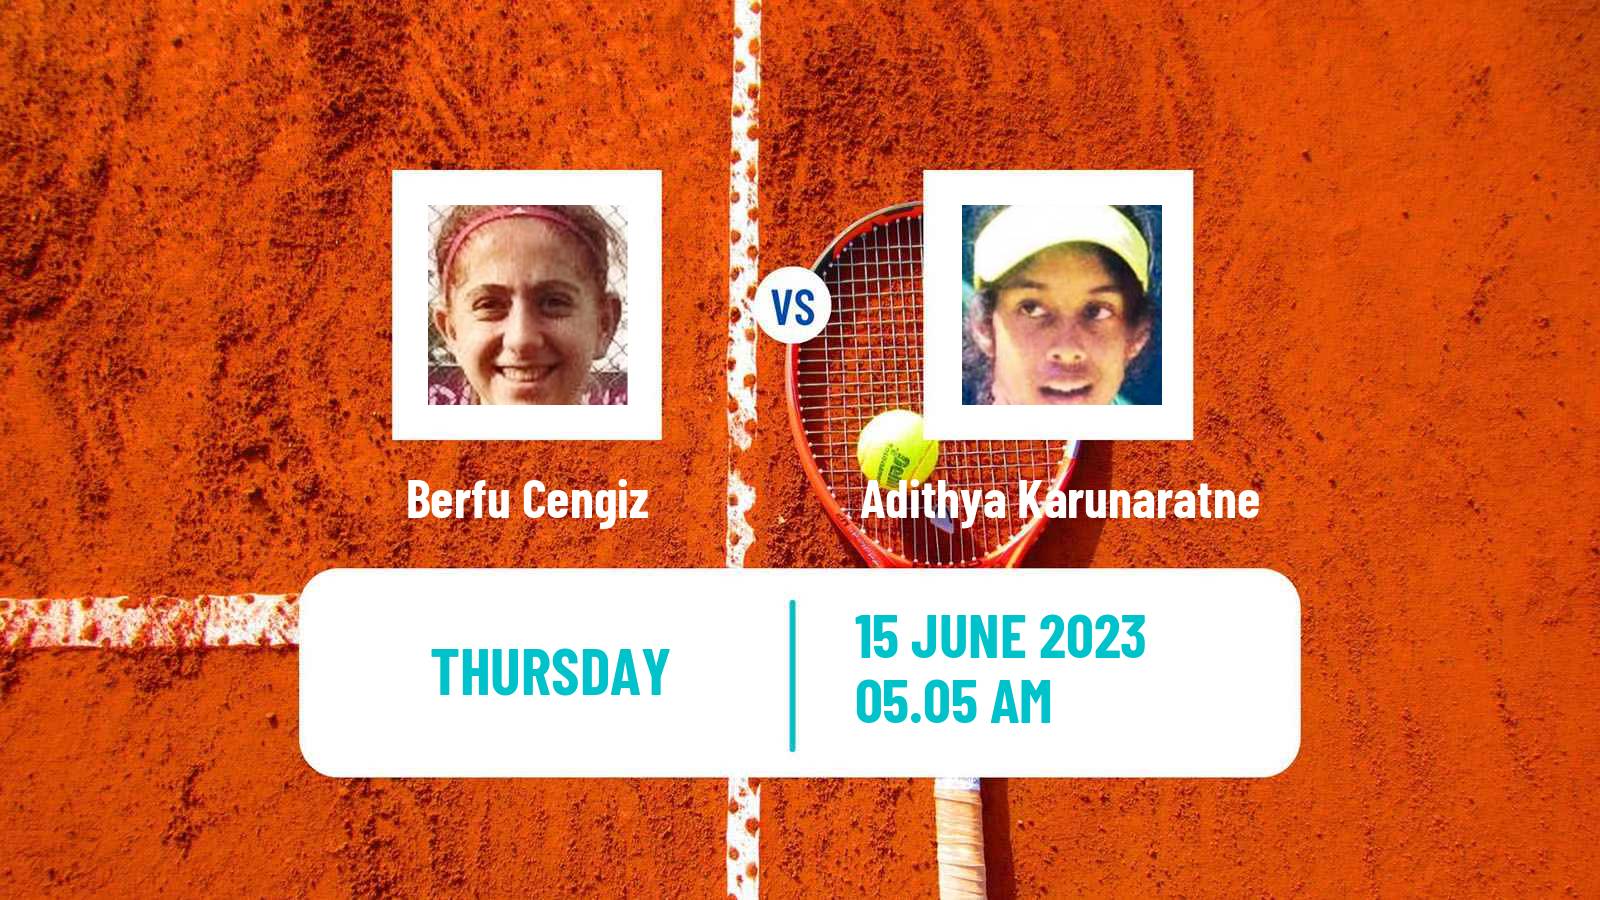 Tennis ITF W60 Madrid Women Berfu Cengiz - Adithya Karunaratne